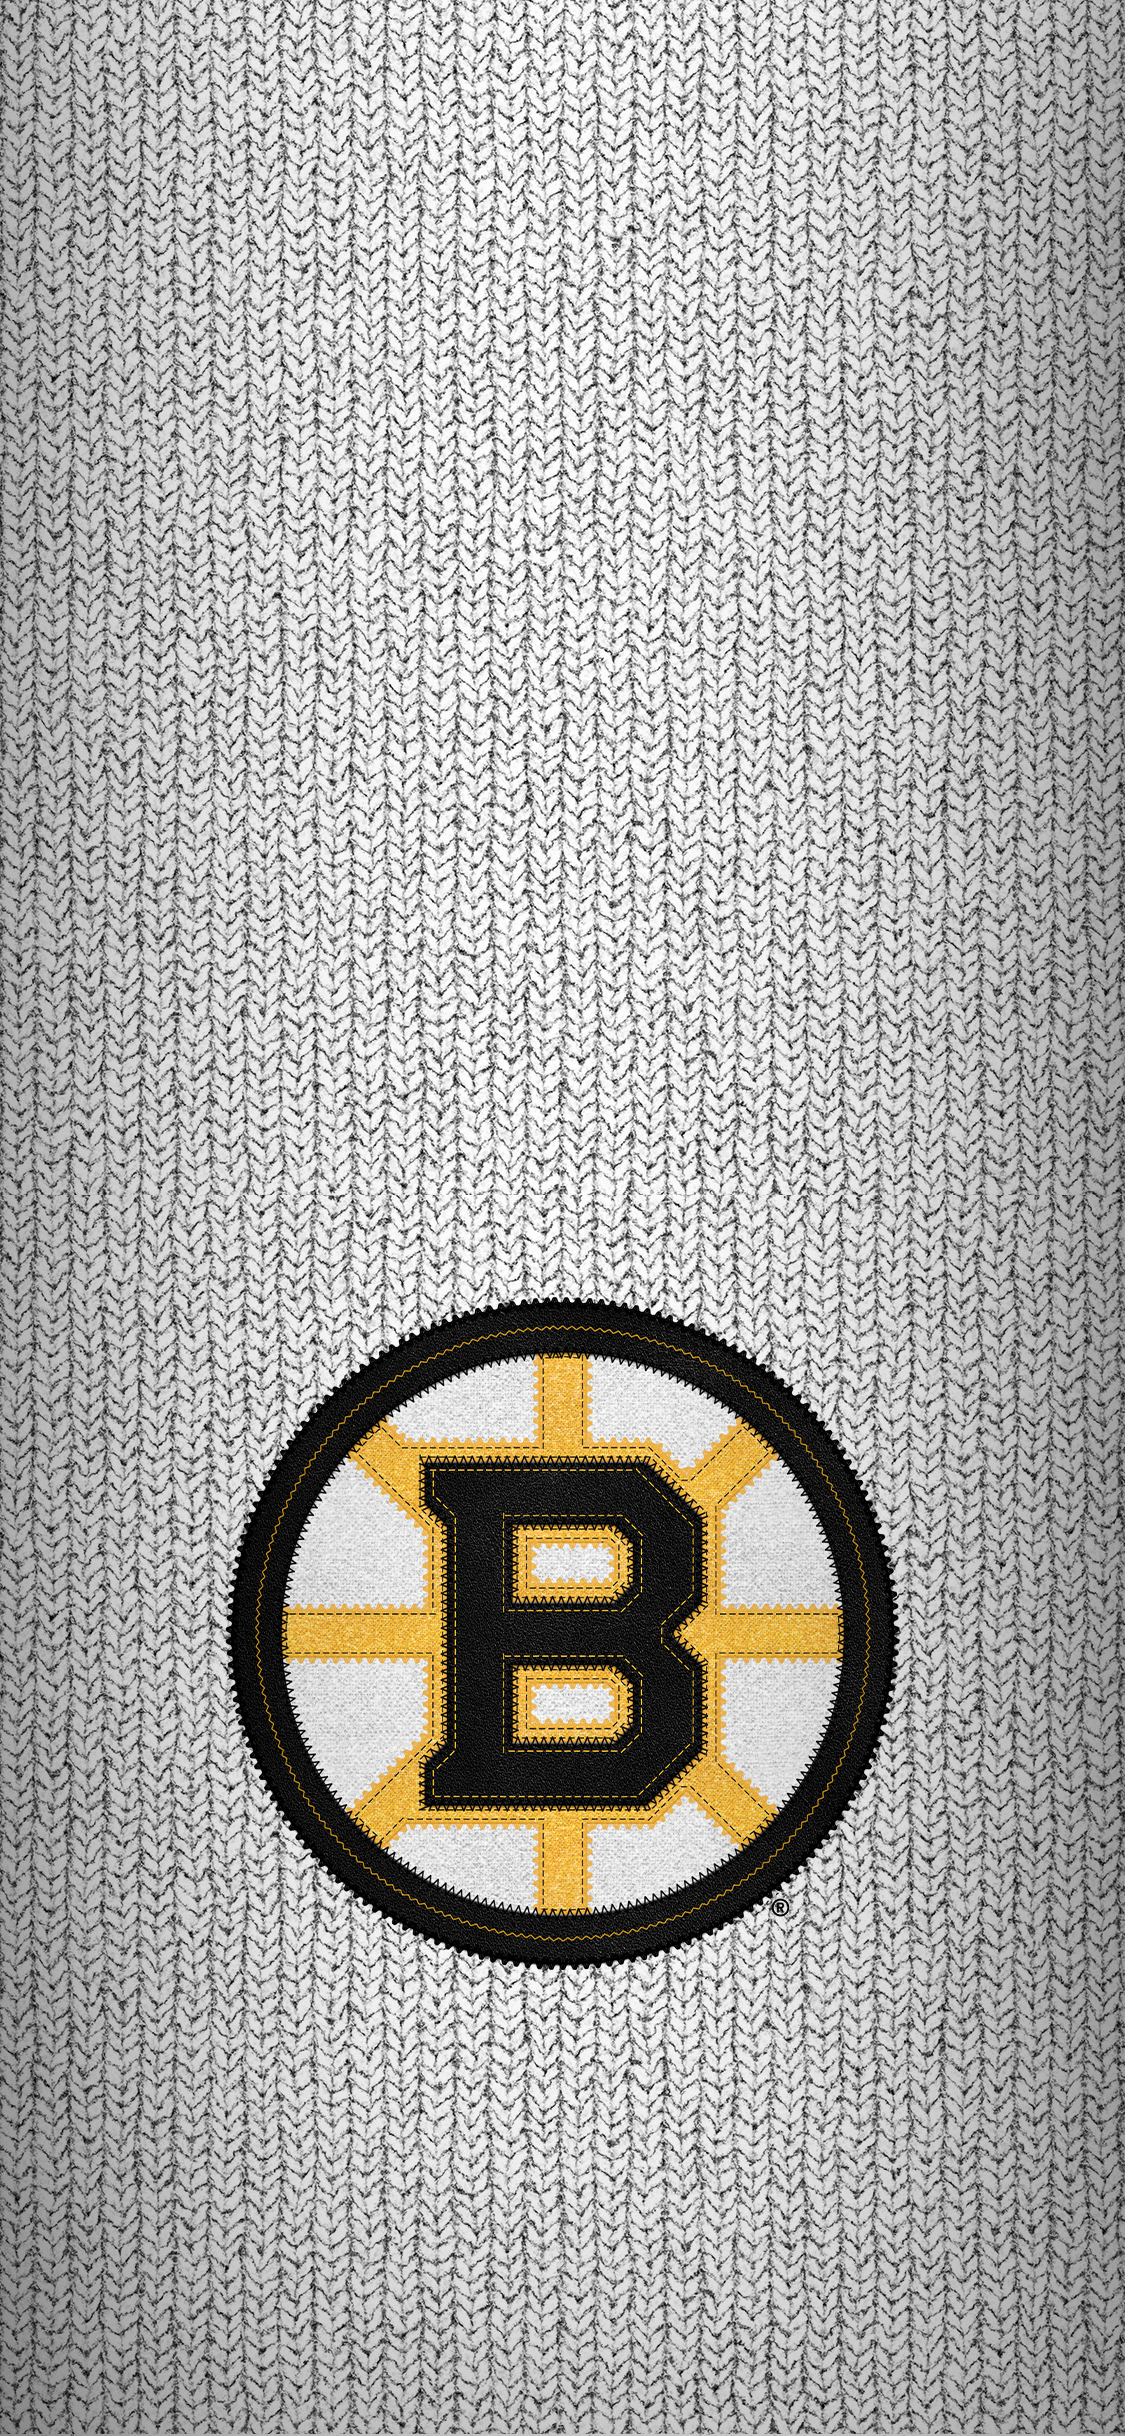 Boston bruins iphone HD wallpapers